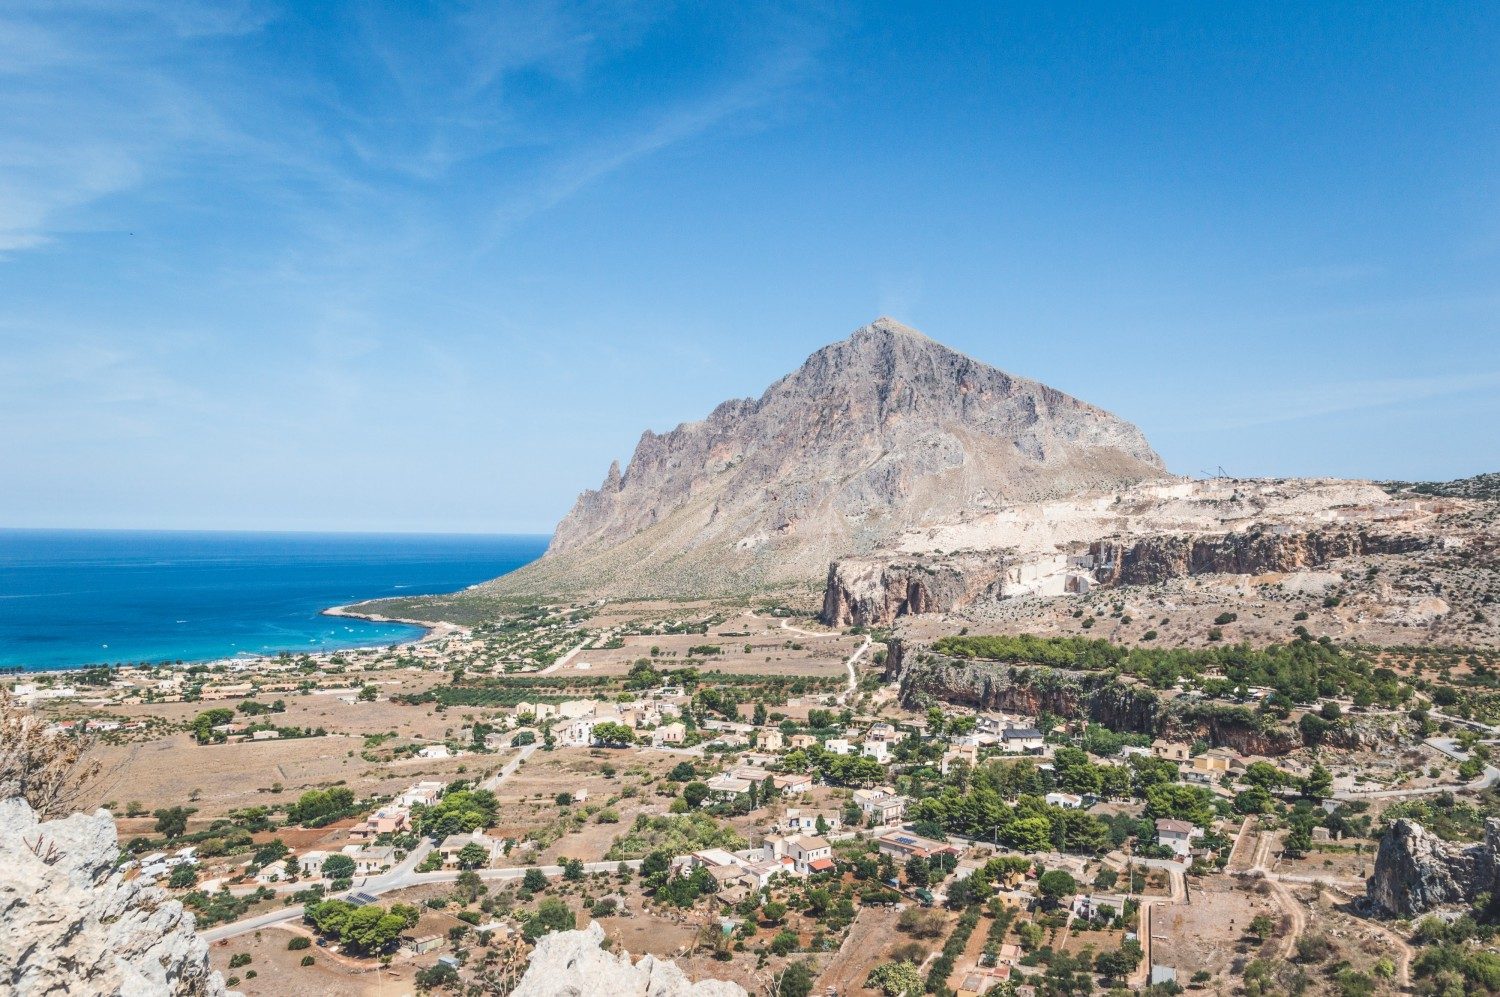 Sicilian landscape